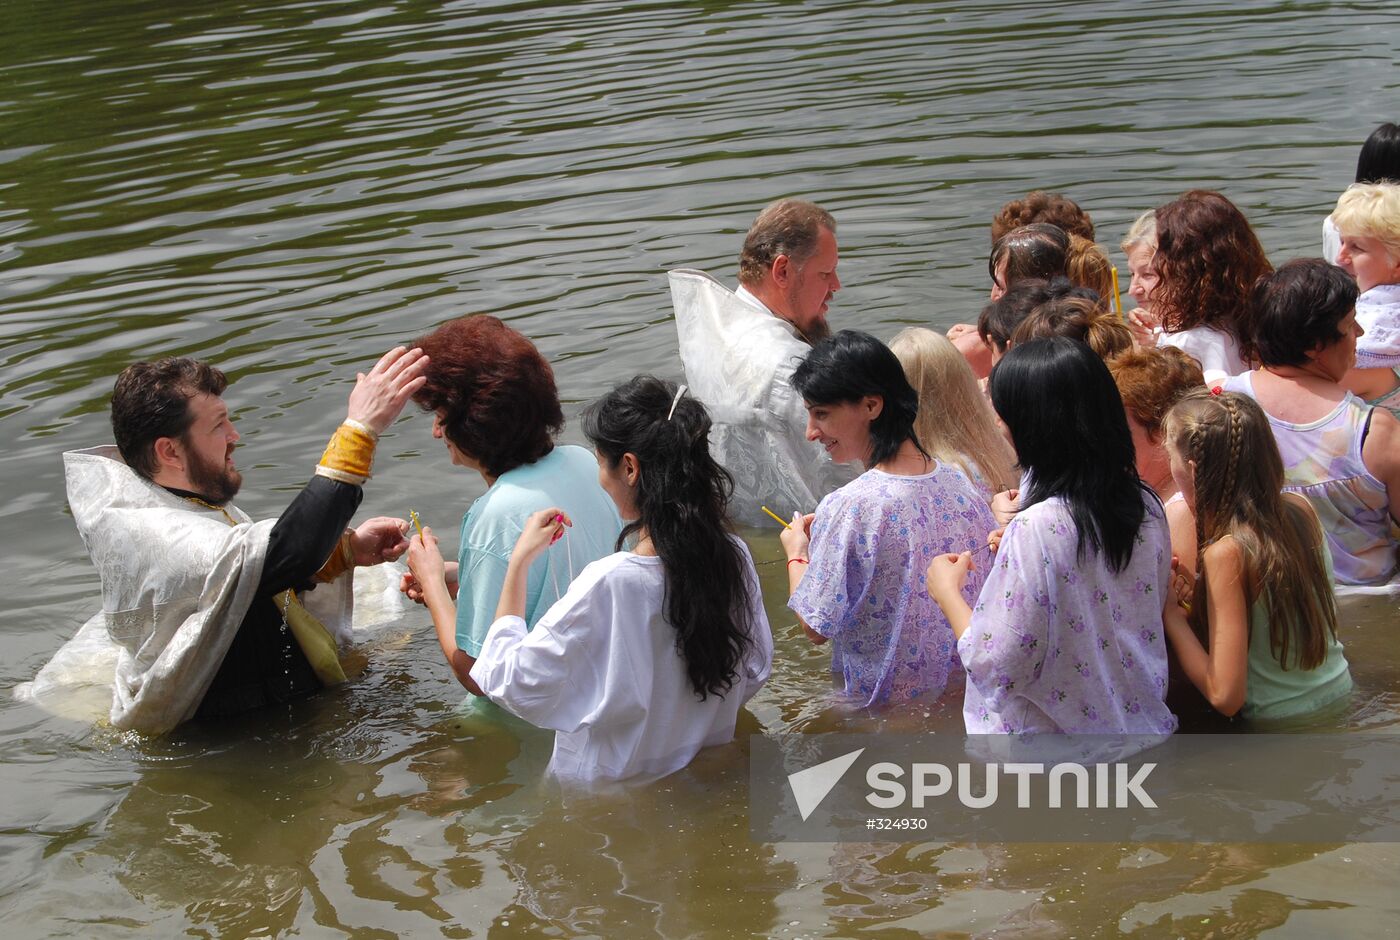 Receiving baptism